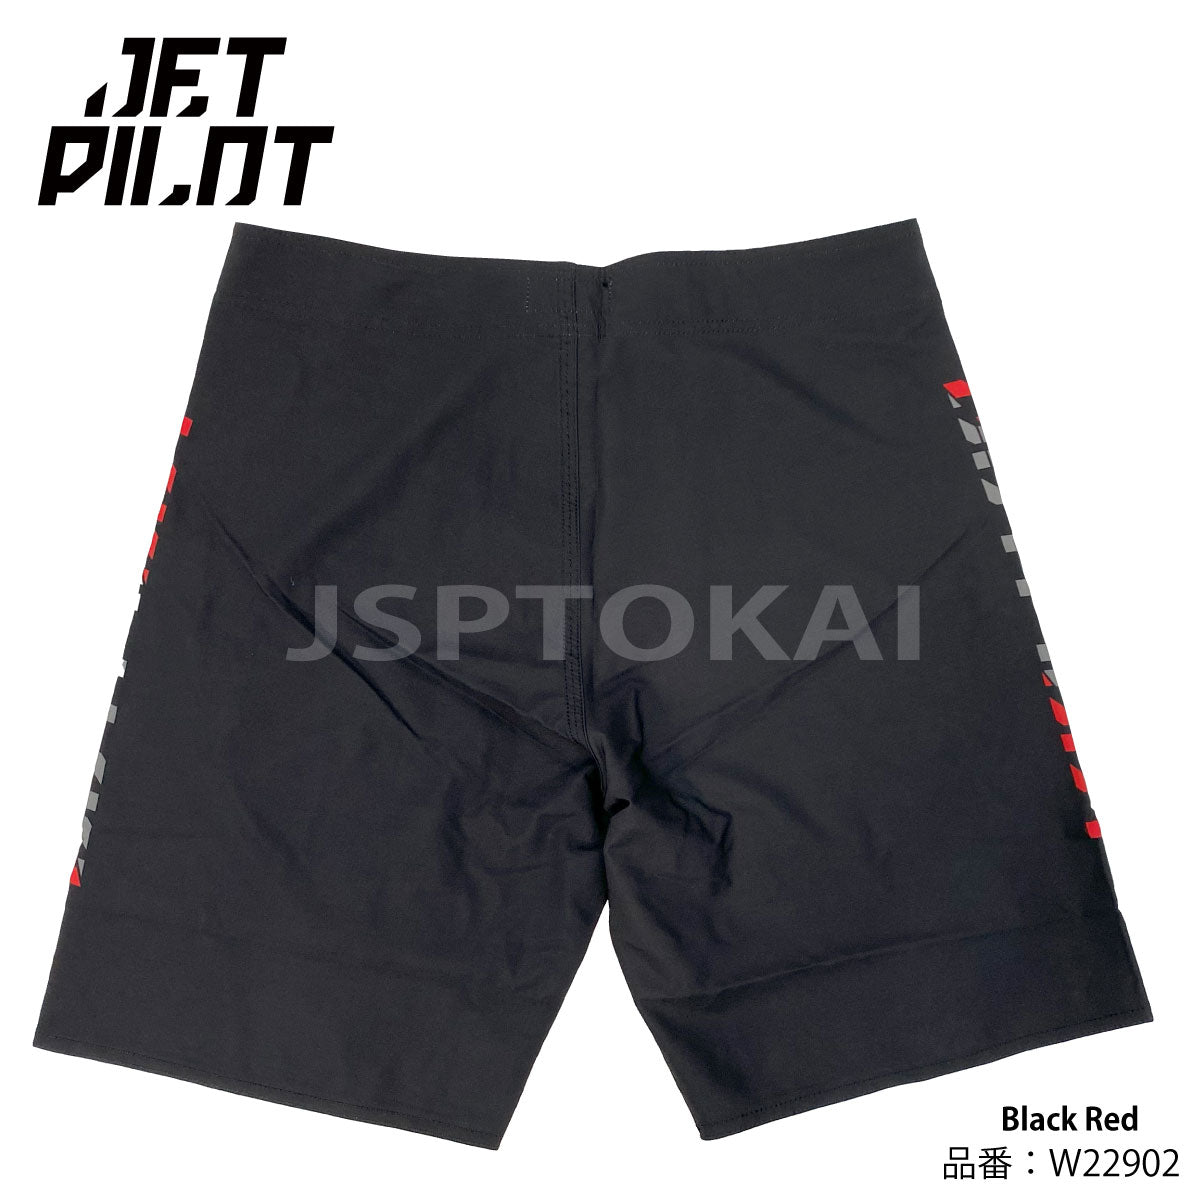 【34%OFF】JETPILOT ジェットパイロットSPCICER BS MEN'S BOARDSHORT メンズ W22902